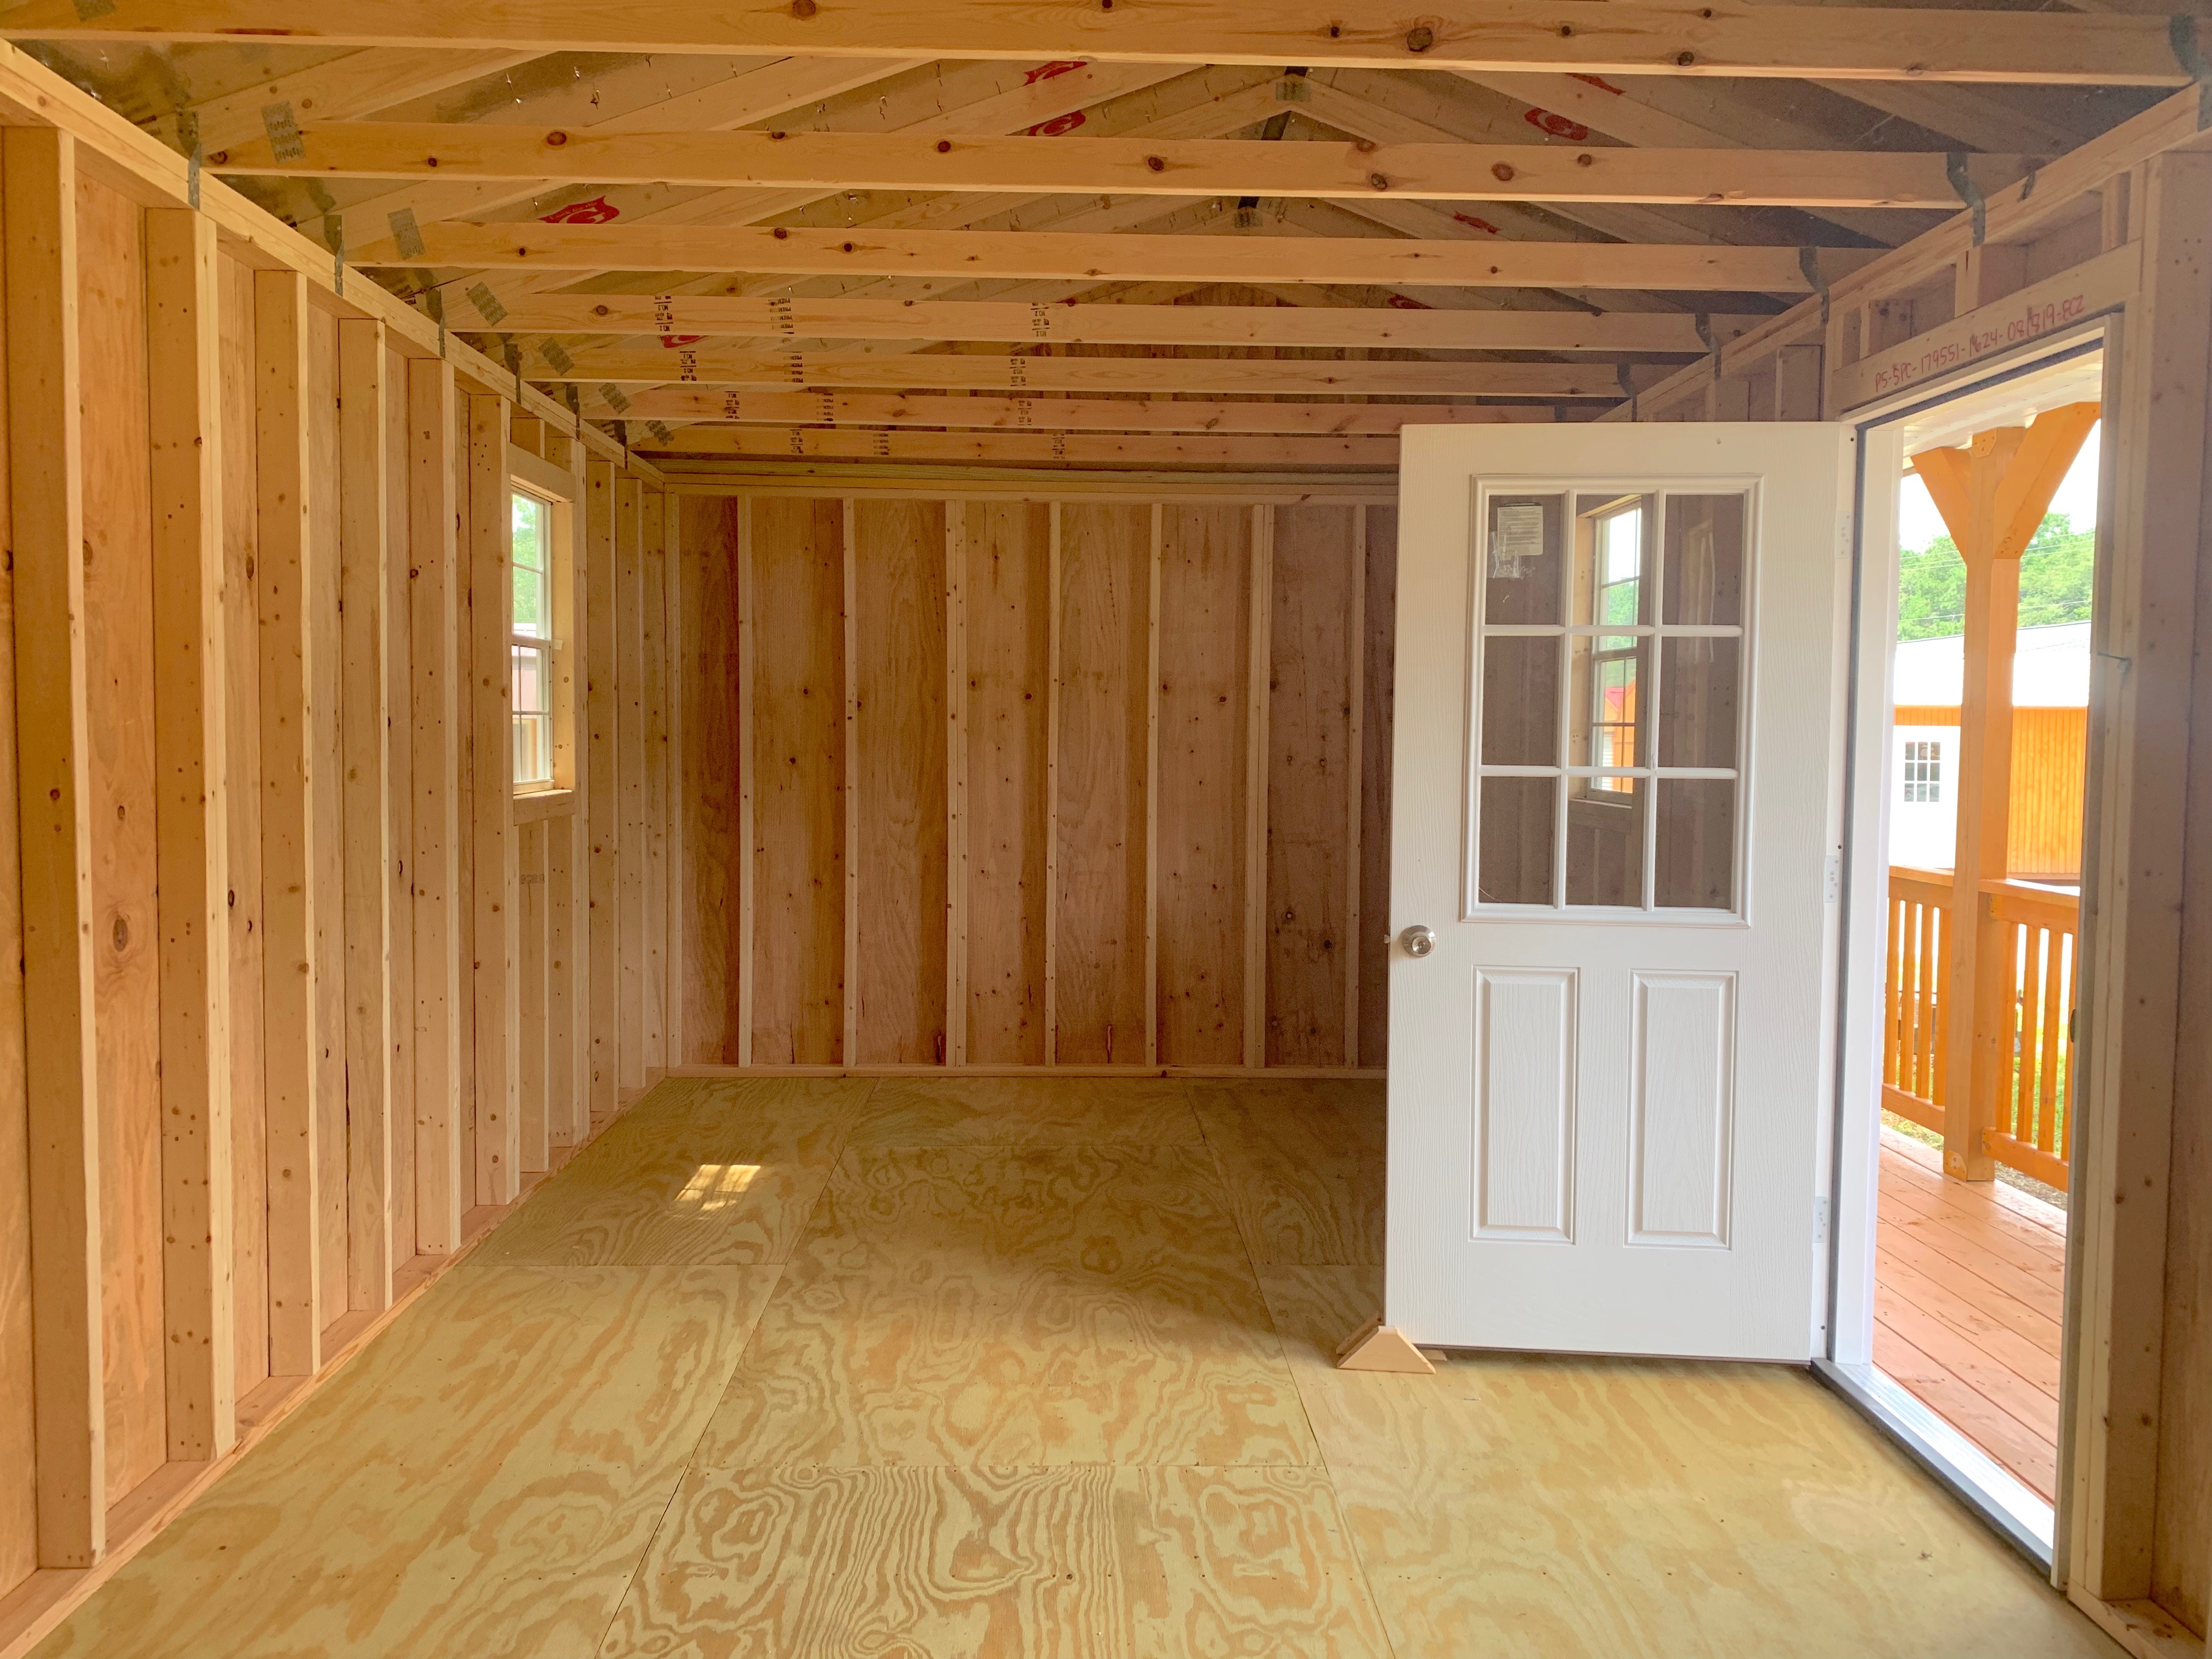 prefabricated shed kit modern-shed kit: 12' x 16